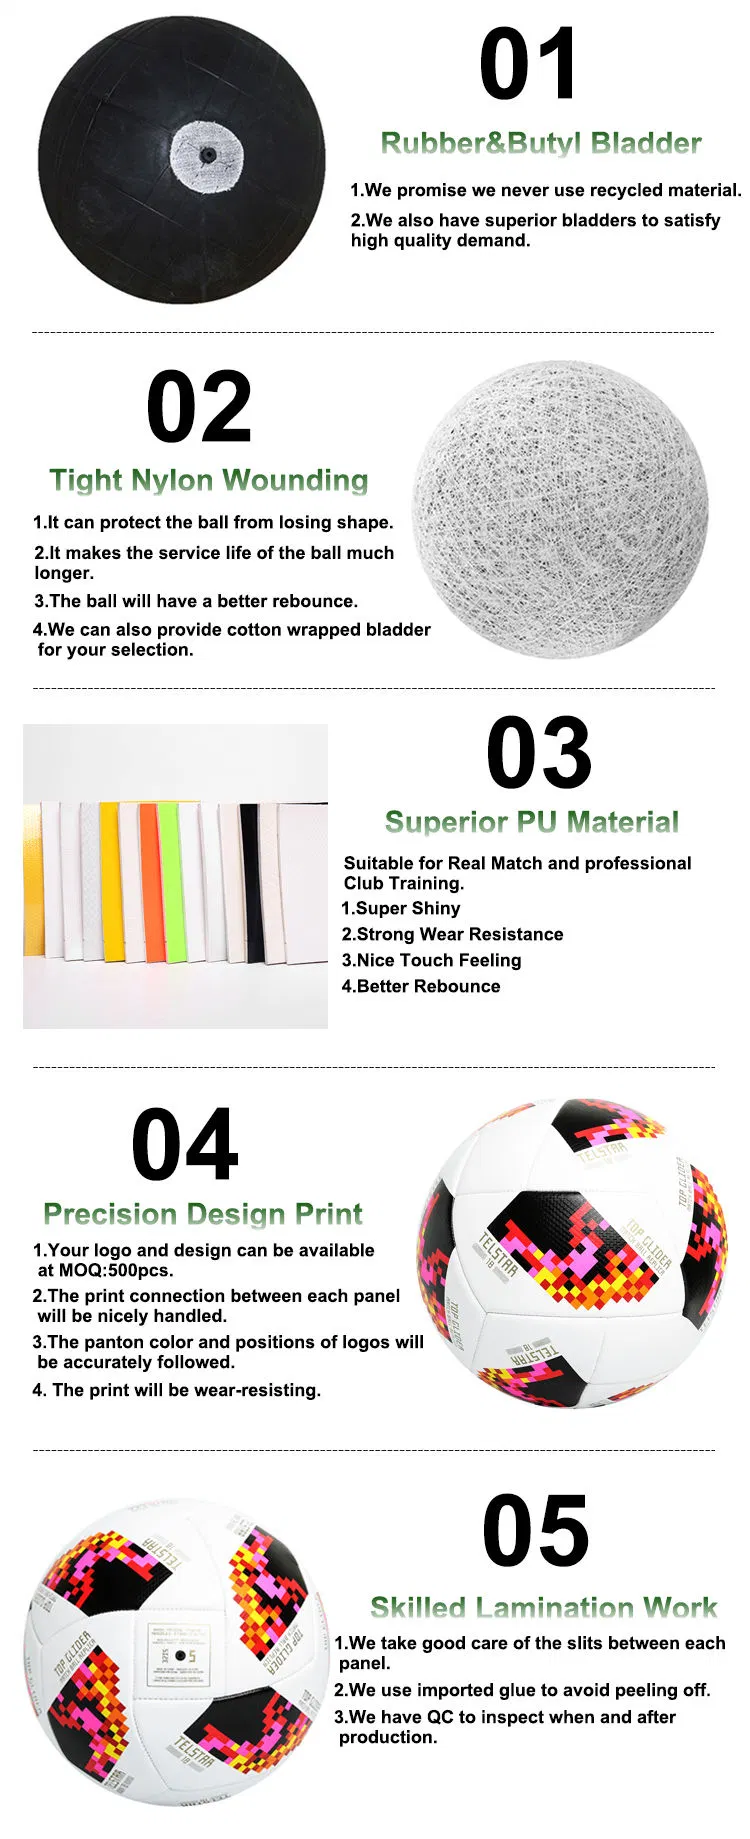 New Design Custom Official World Cup Soccer Ball